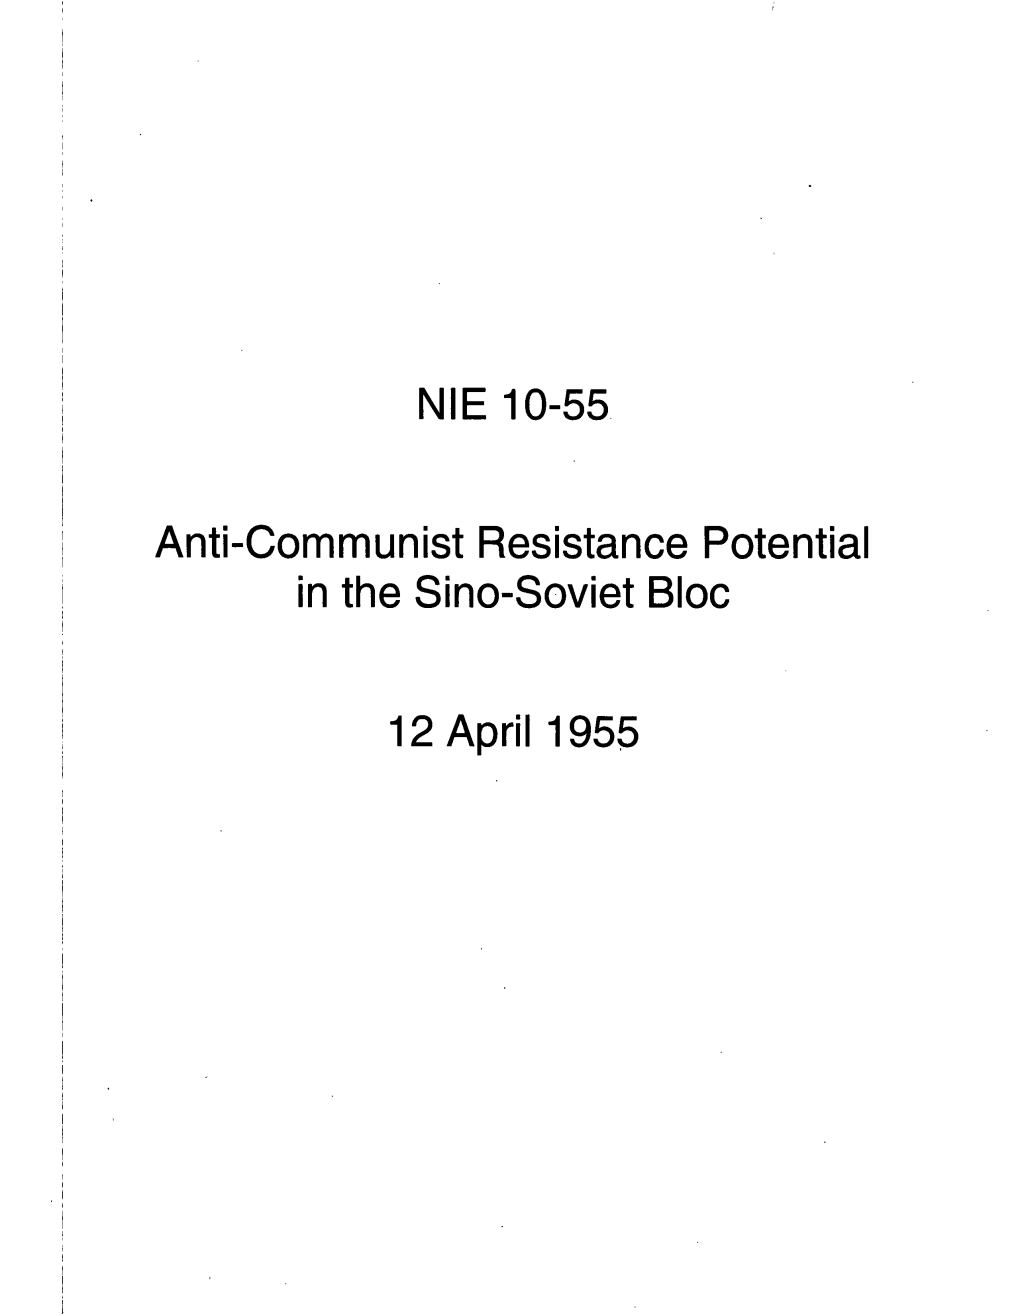 NIE 10-55 Anti-Communist Resistance Potential in the Sino-Soviet Bloc